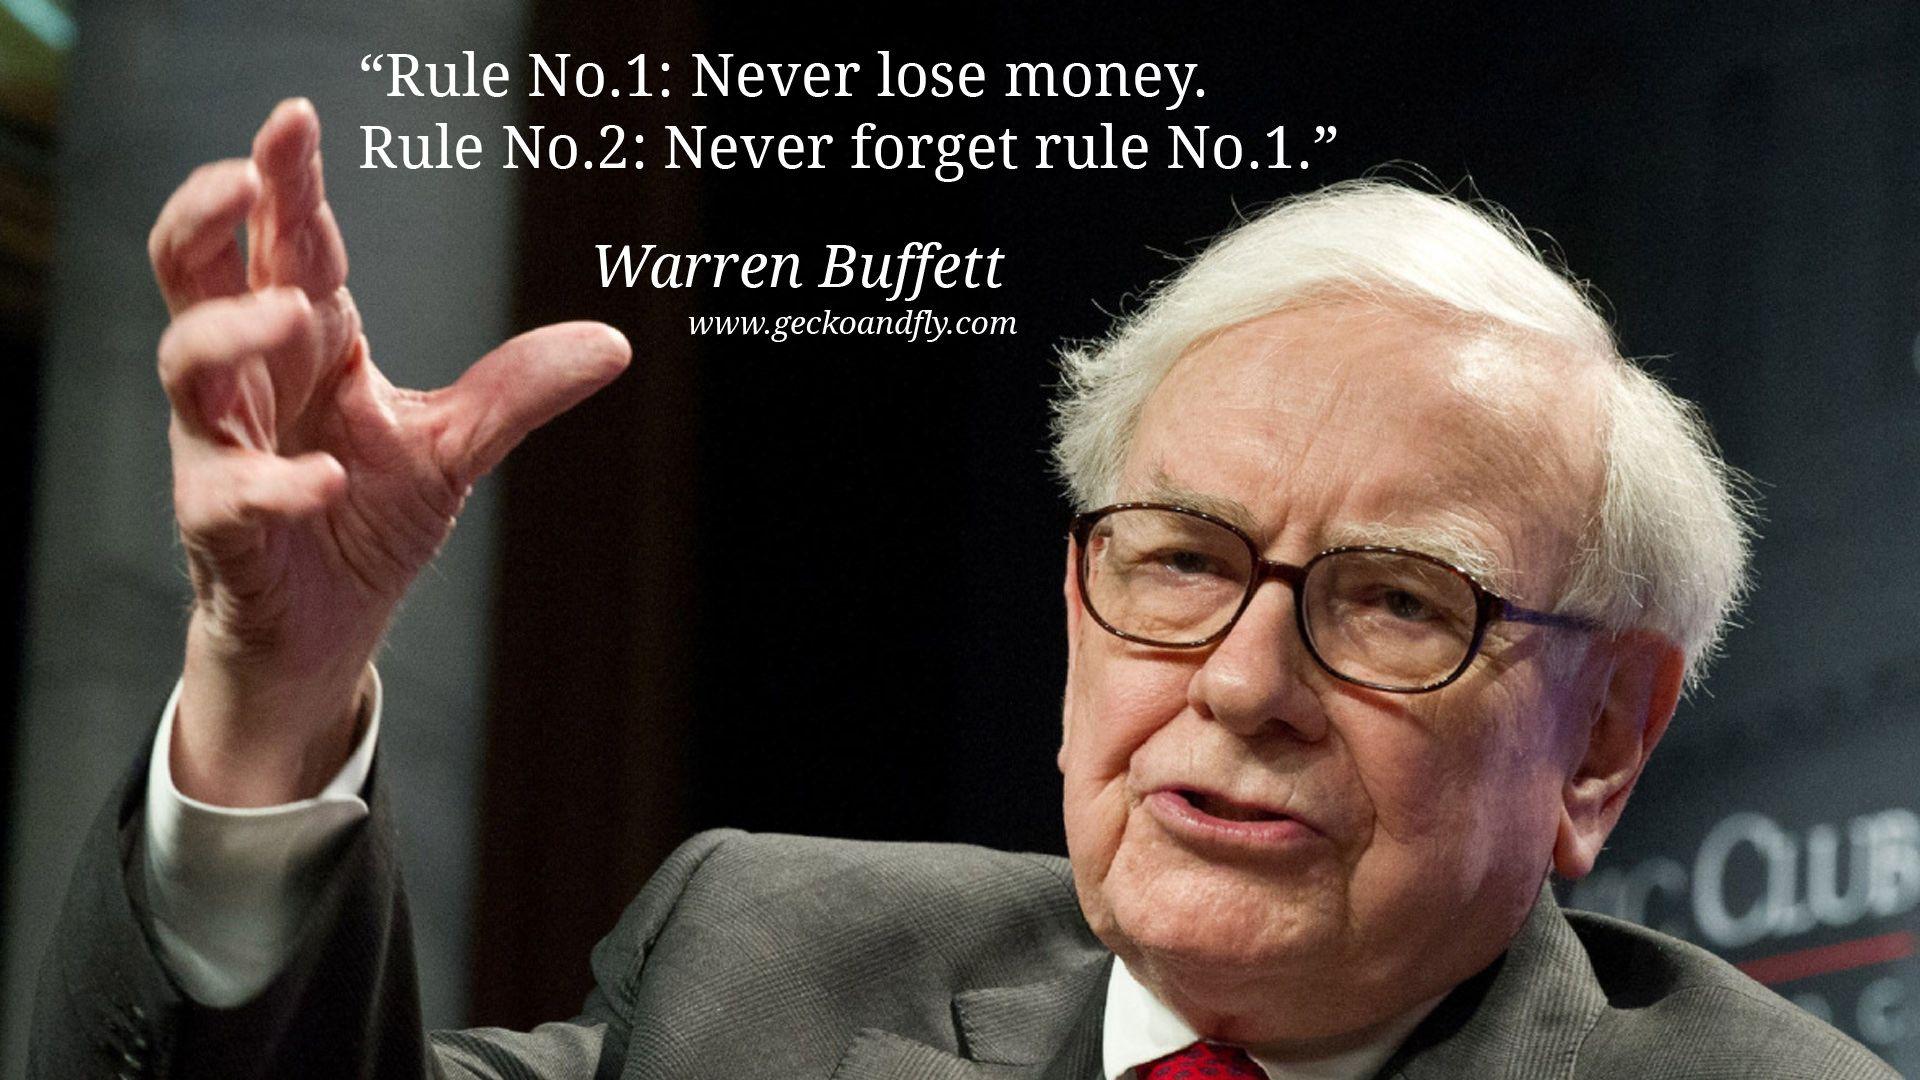 Warren Buffett Wallpapers - Top Free Warren Buffett Backgrounds